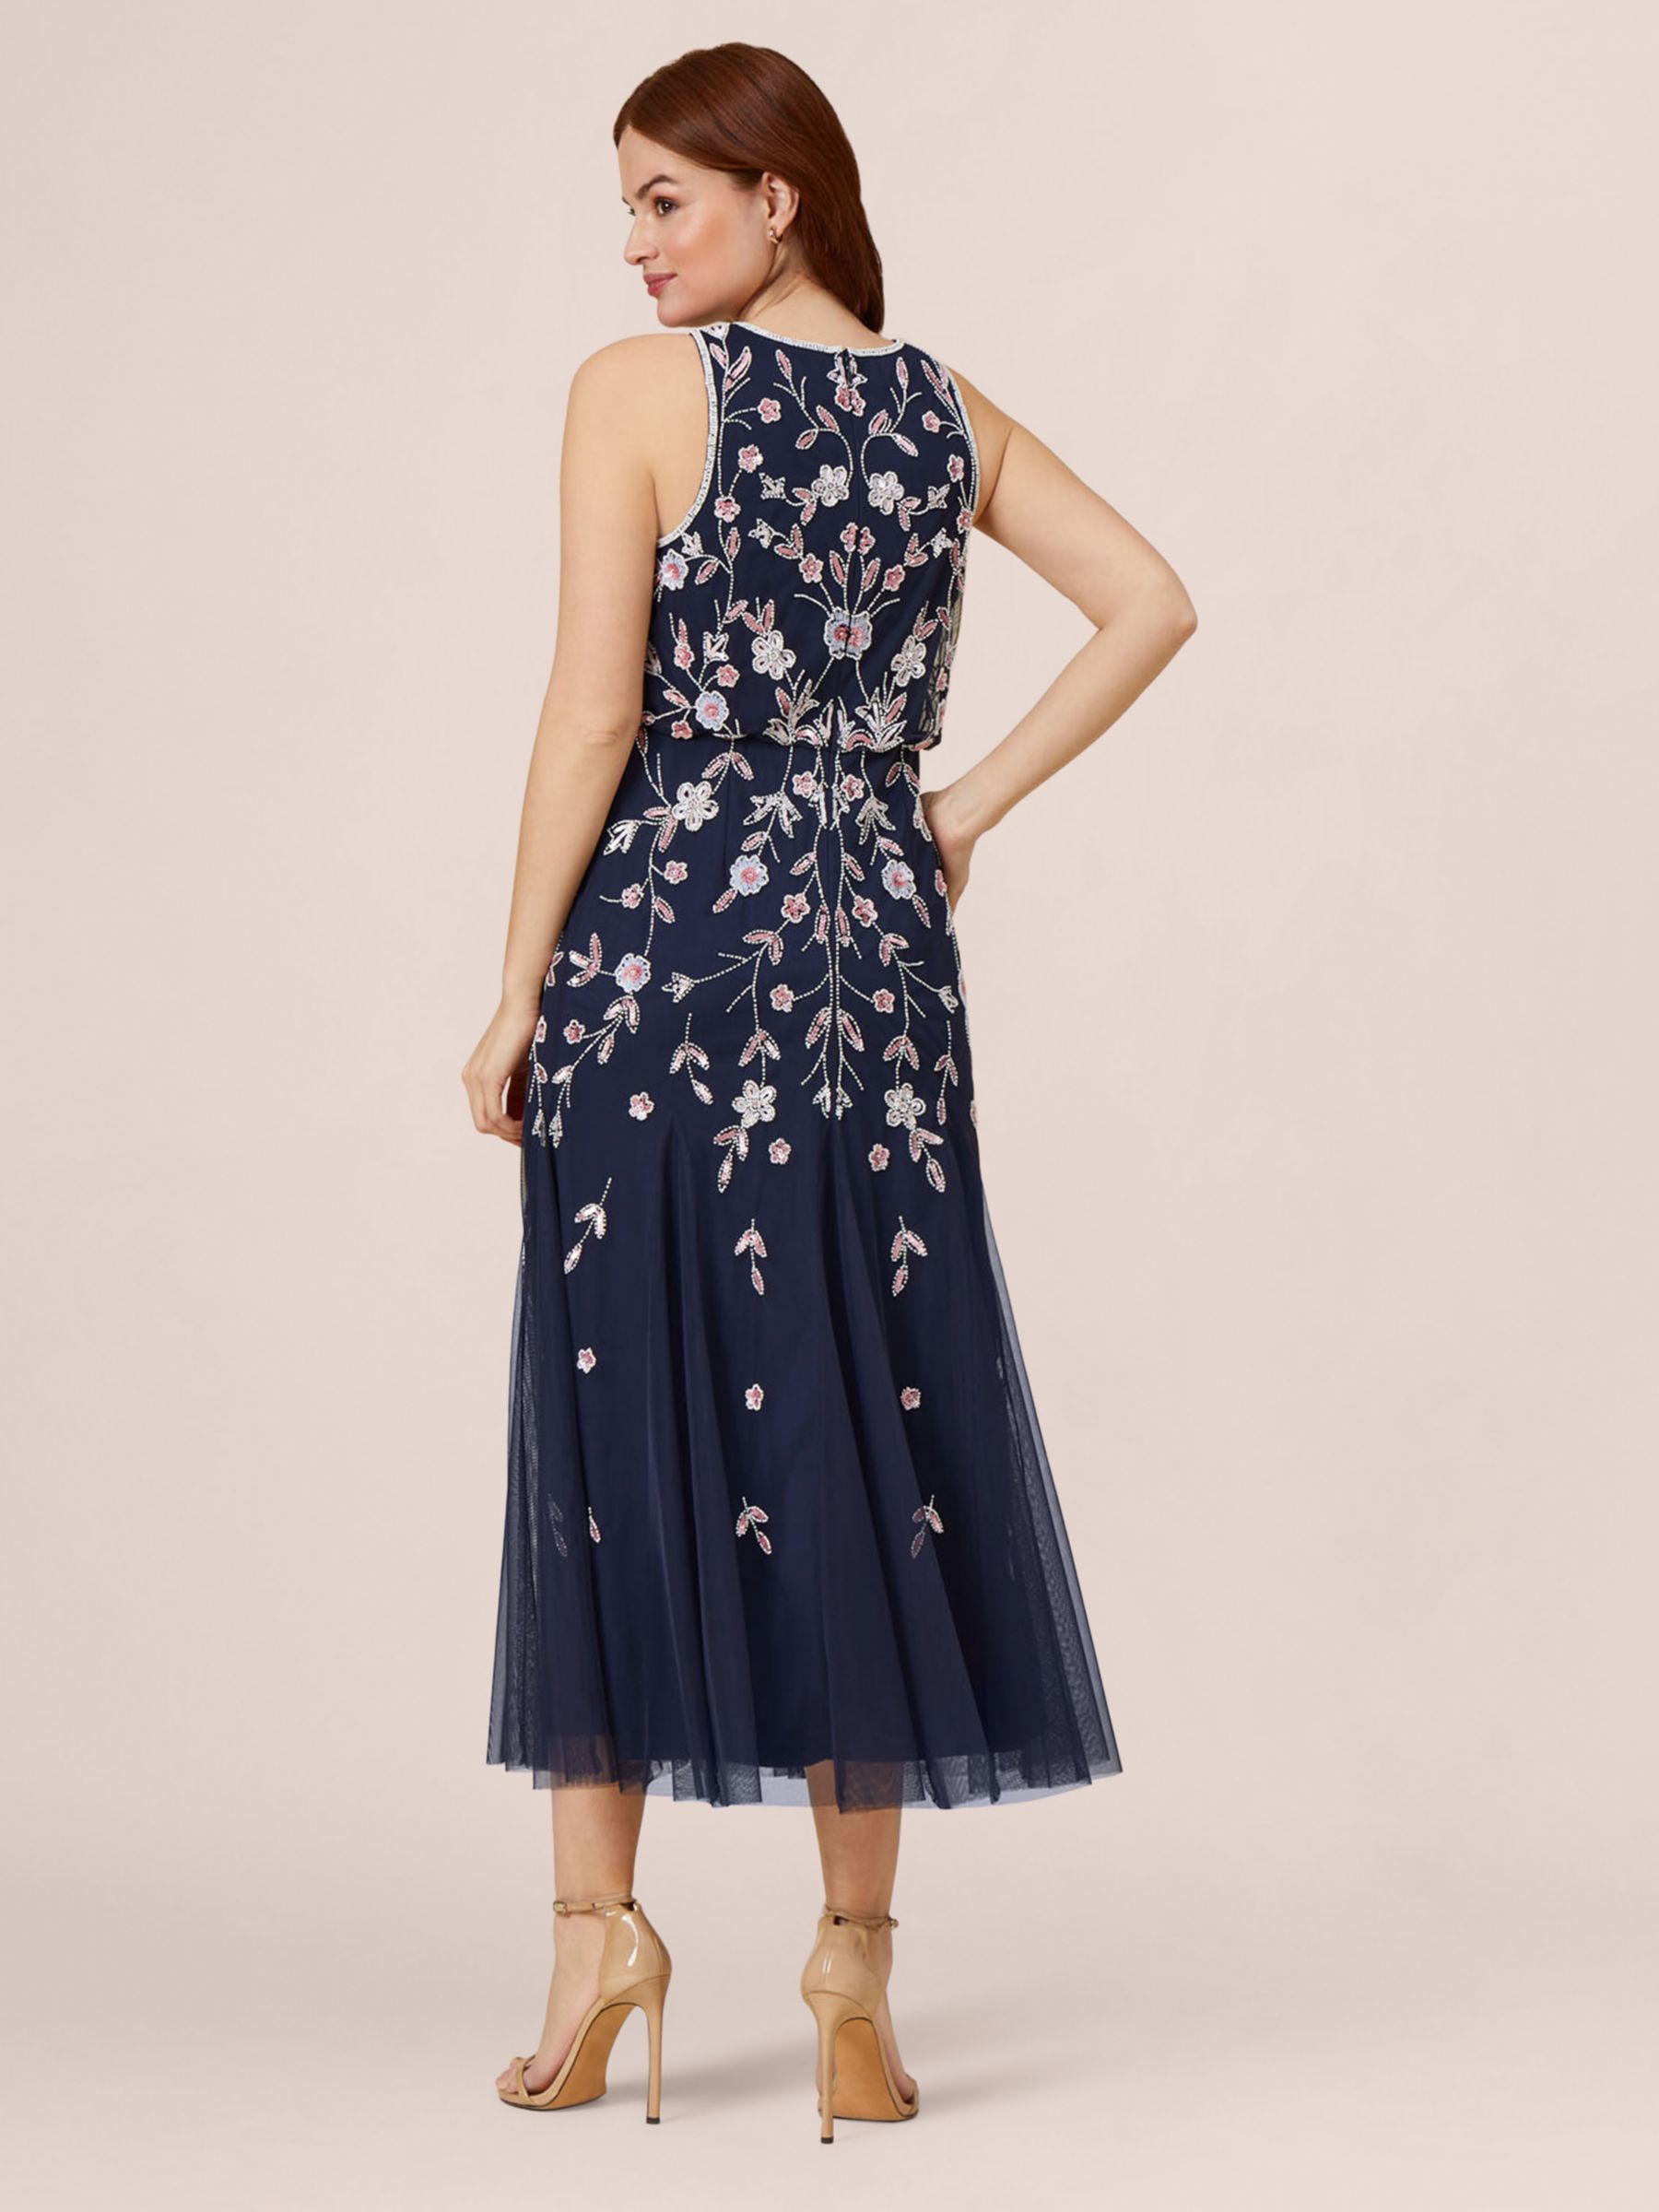 Adrianna Papell Beaded Blouson Midi Dress, Navy/Blush, 6